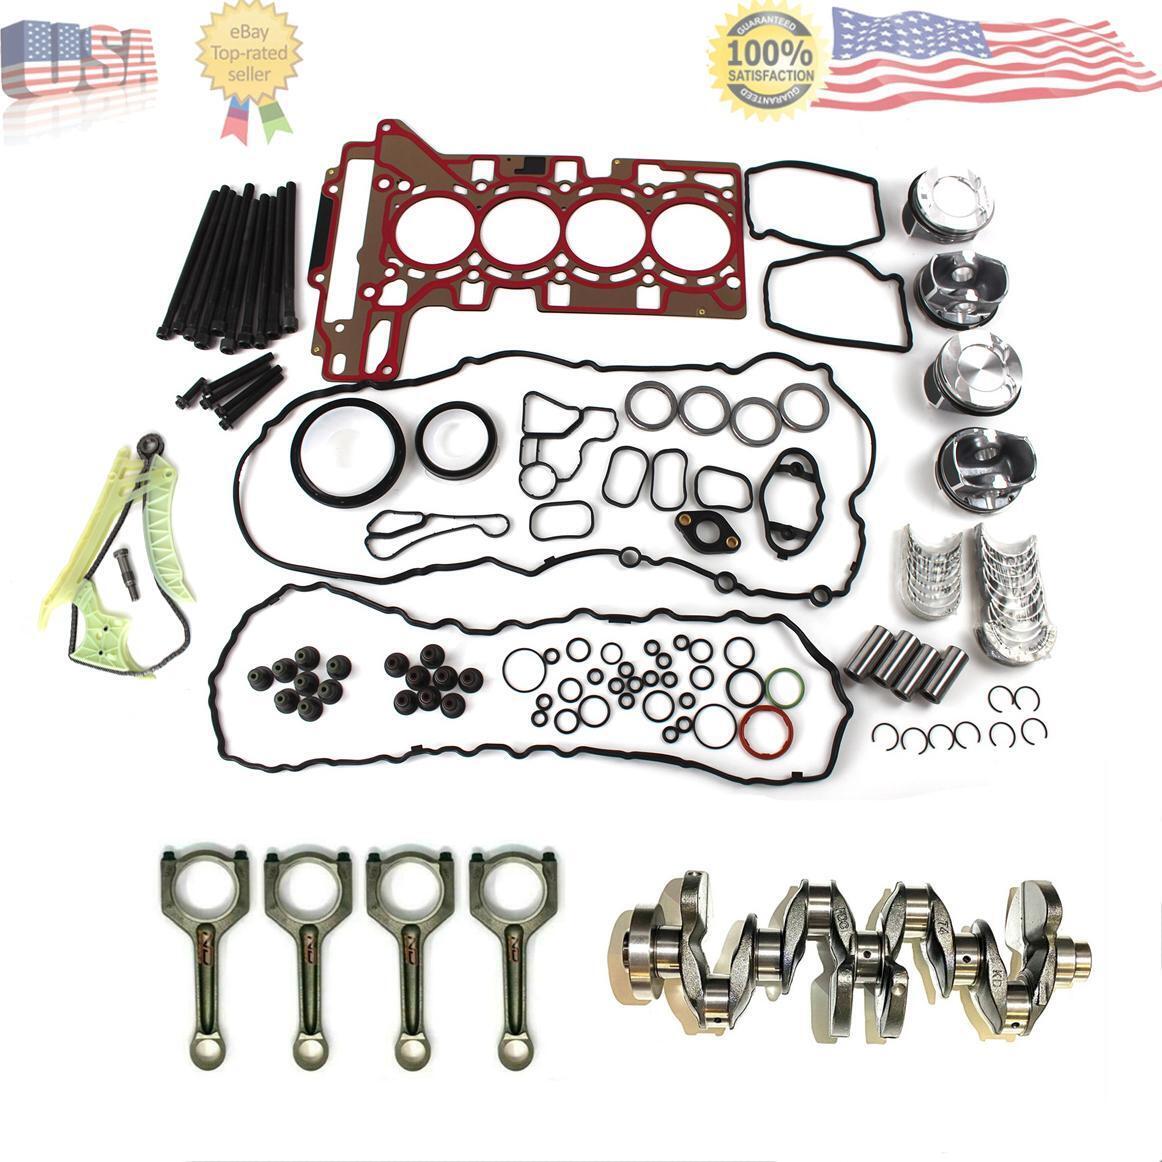 N20 2.0 Engine Overhaul Rebuild Kit Crankshaft/Conrods/Piston Kit/Gasket For BMW